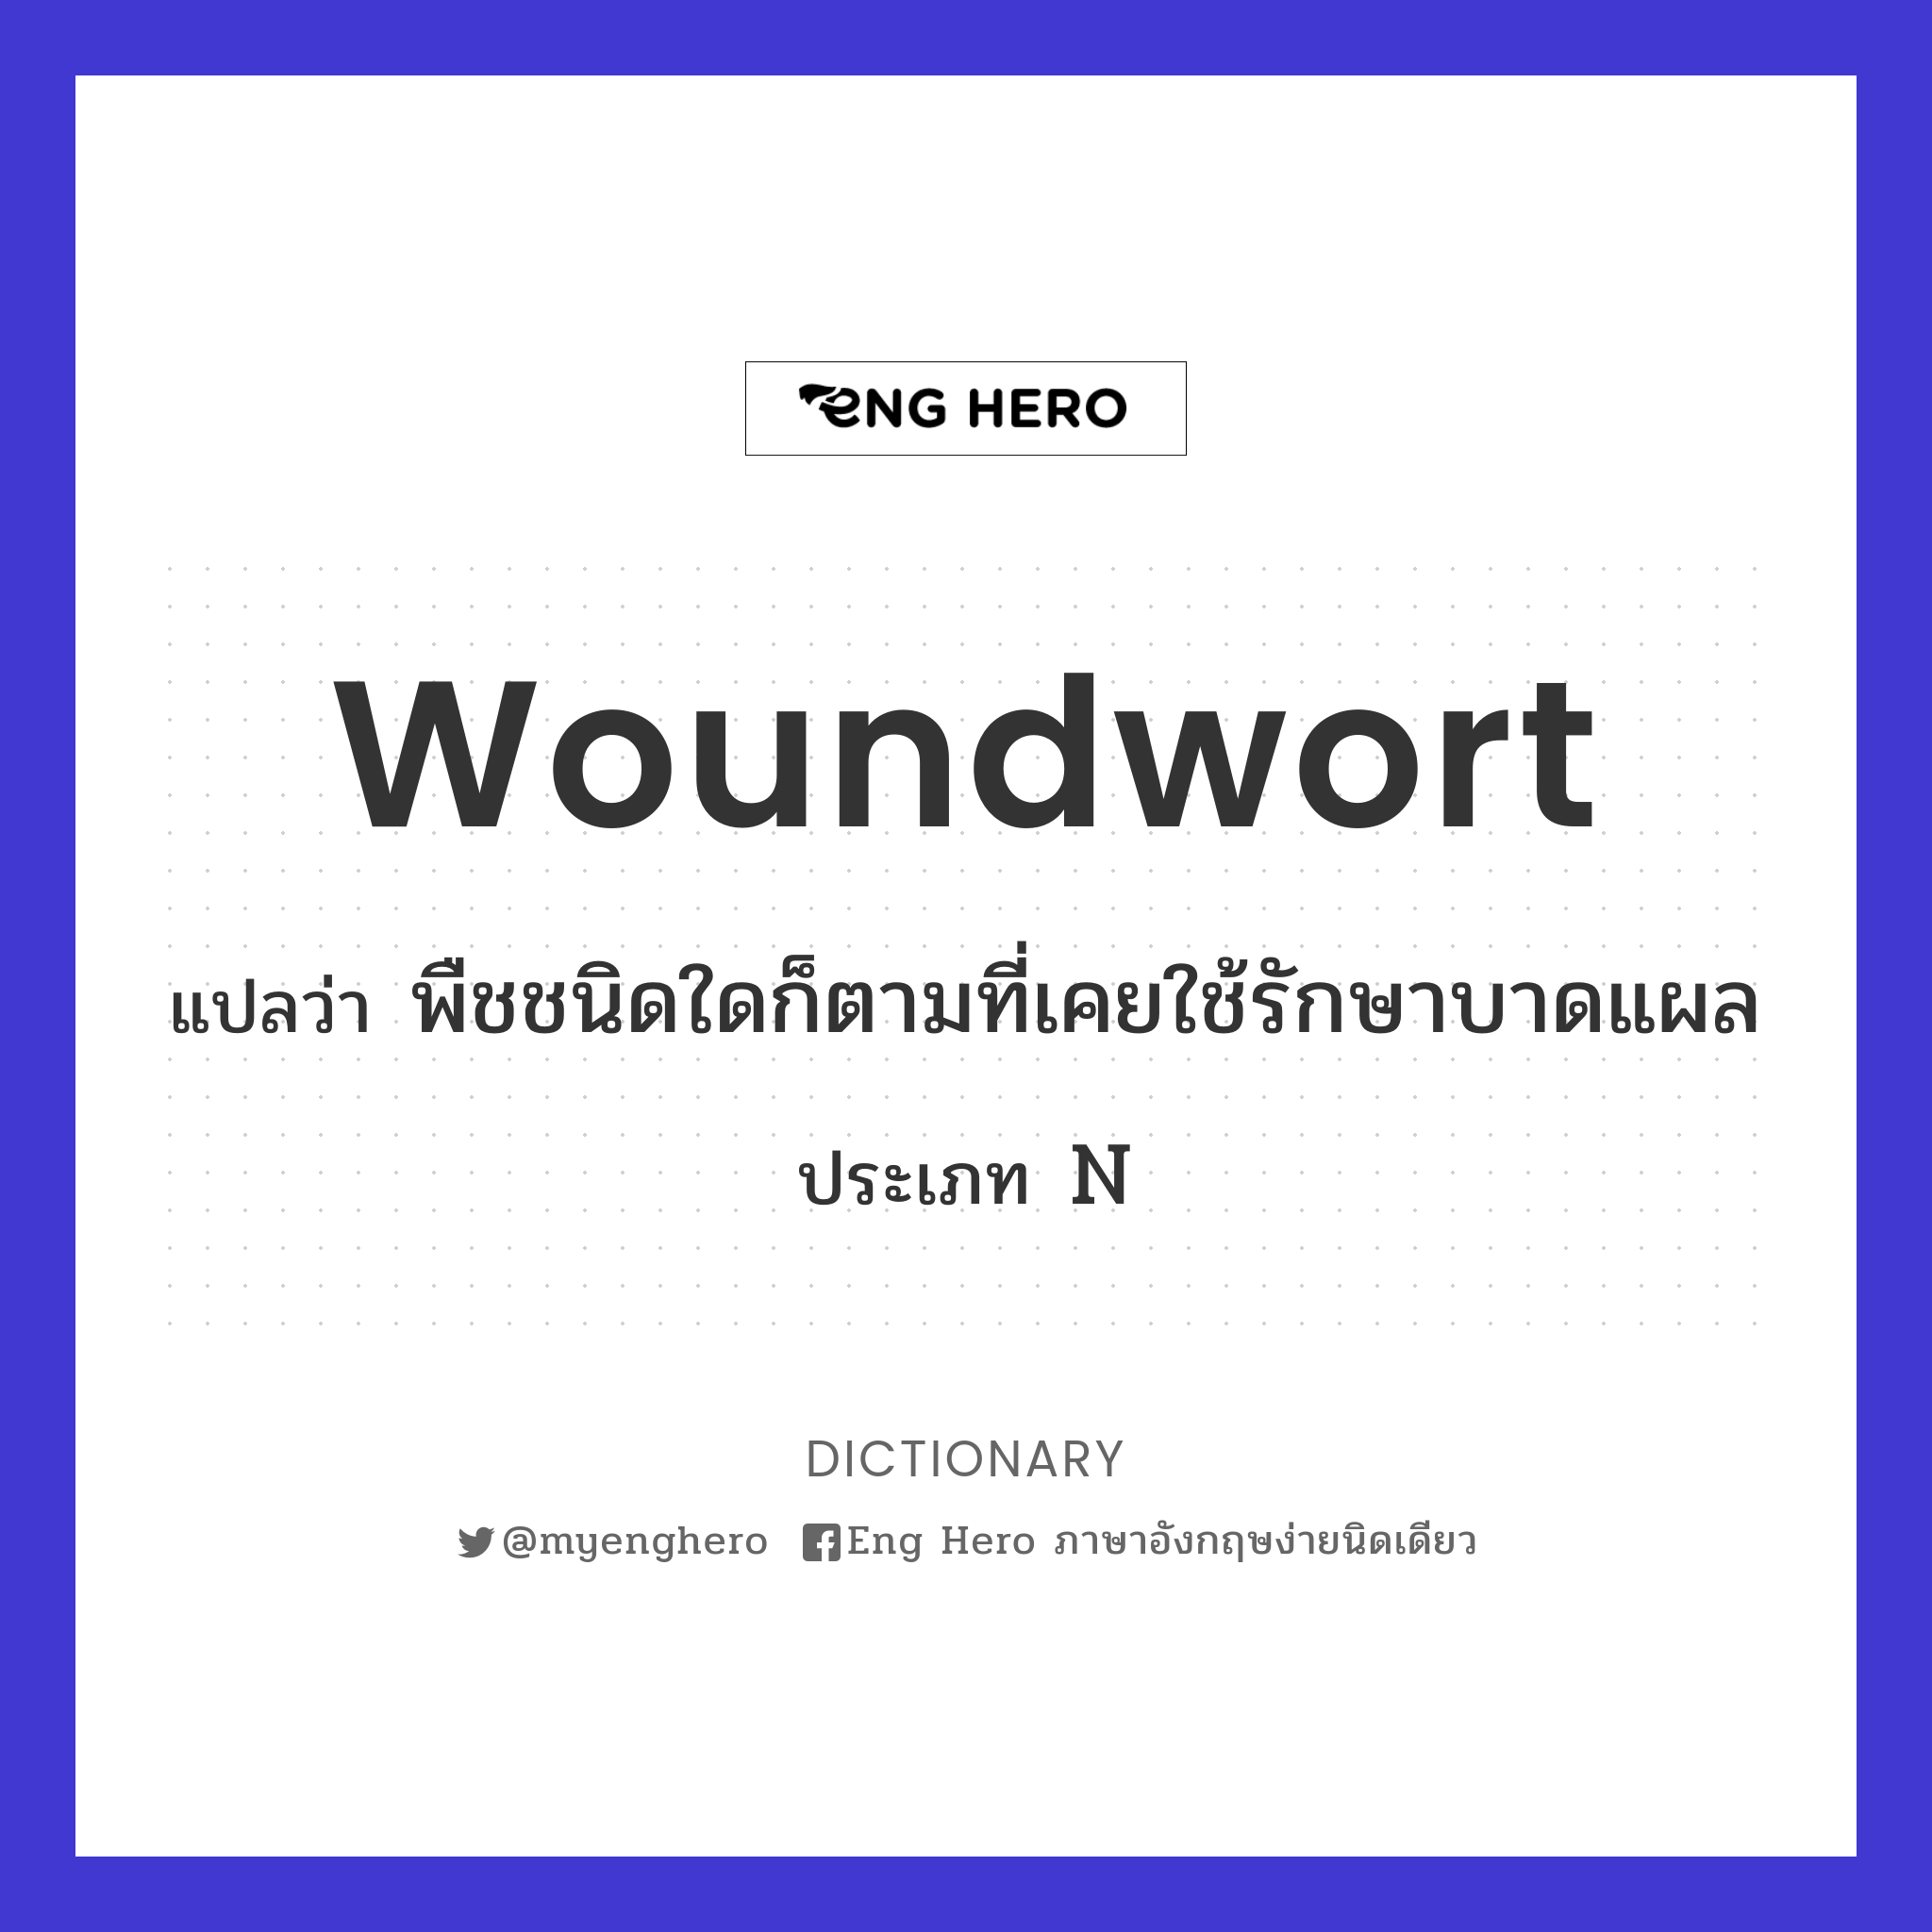 woundwort